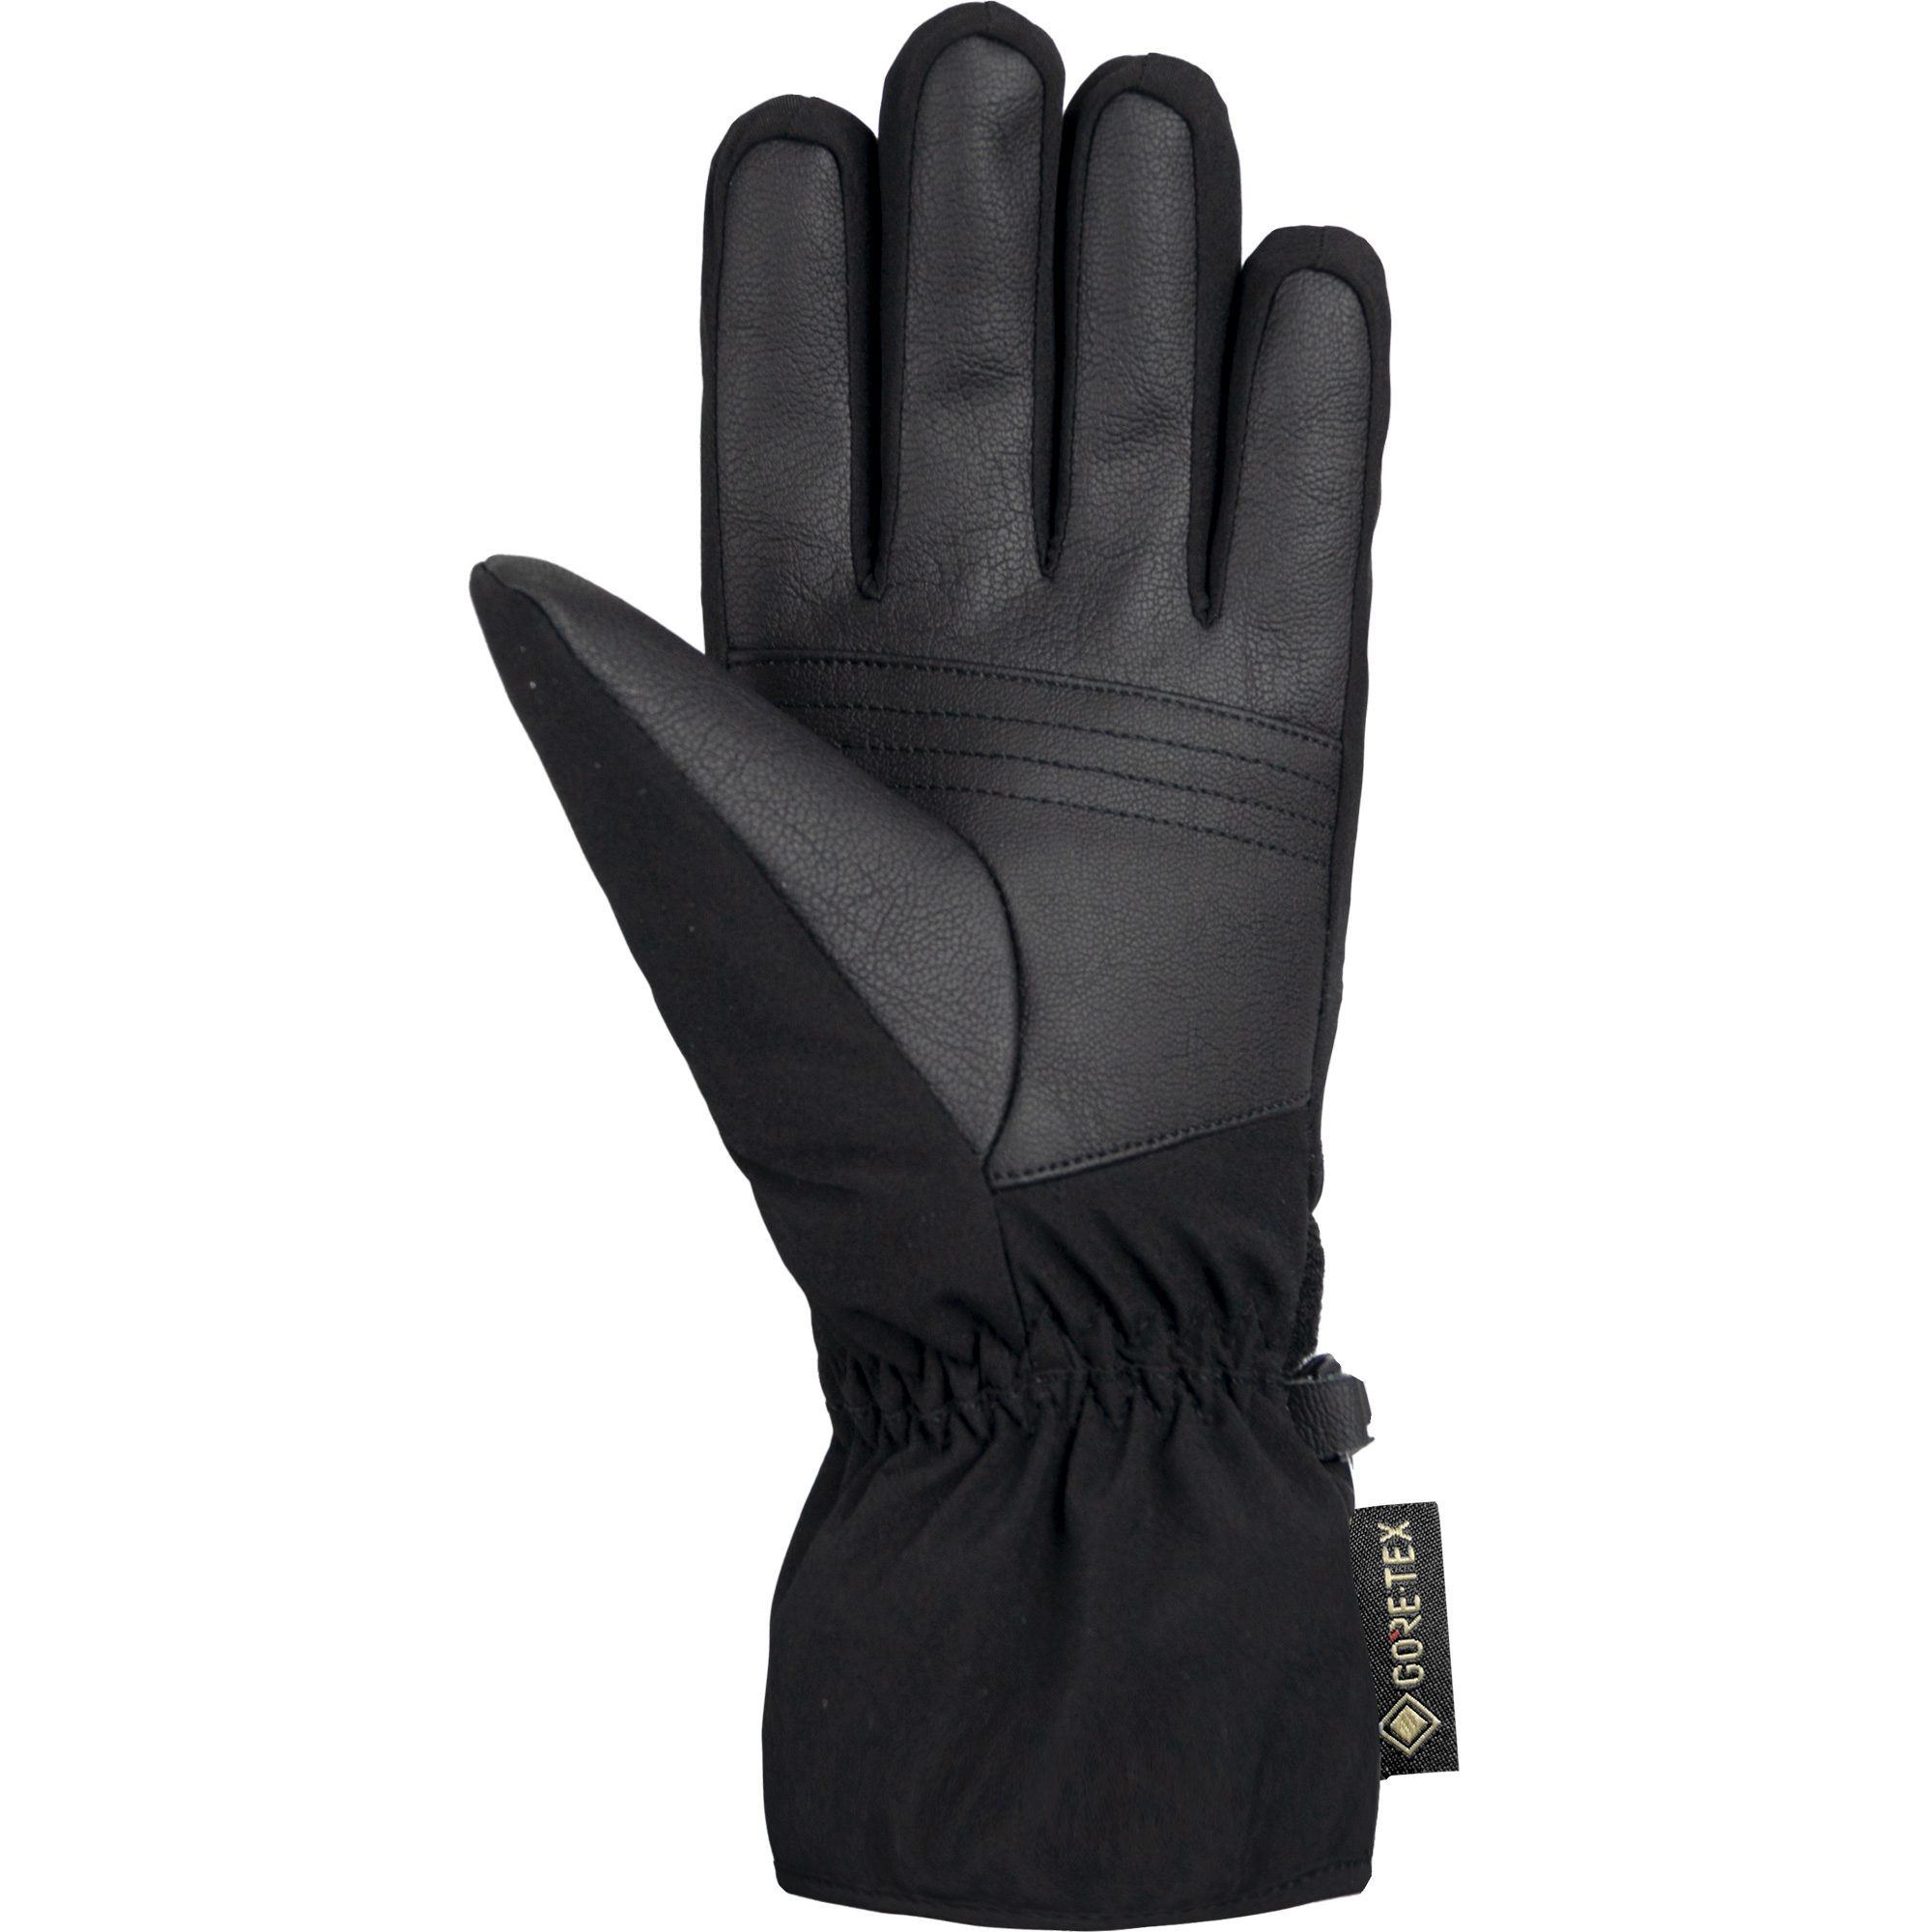 Reusch - Sandy Damen Handschuhe GORE-TEX® Sport Shop im Bittl schwarz kaufen